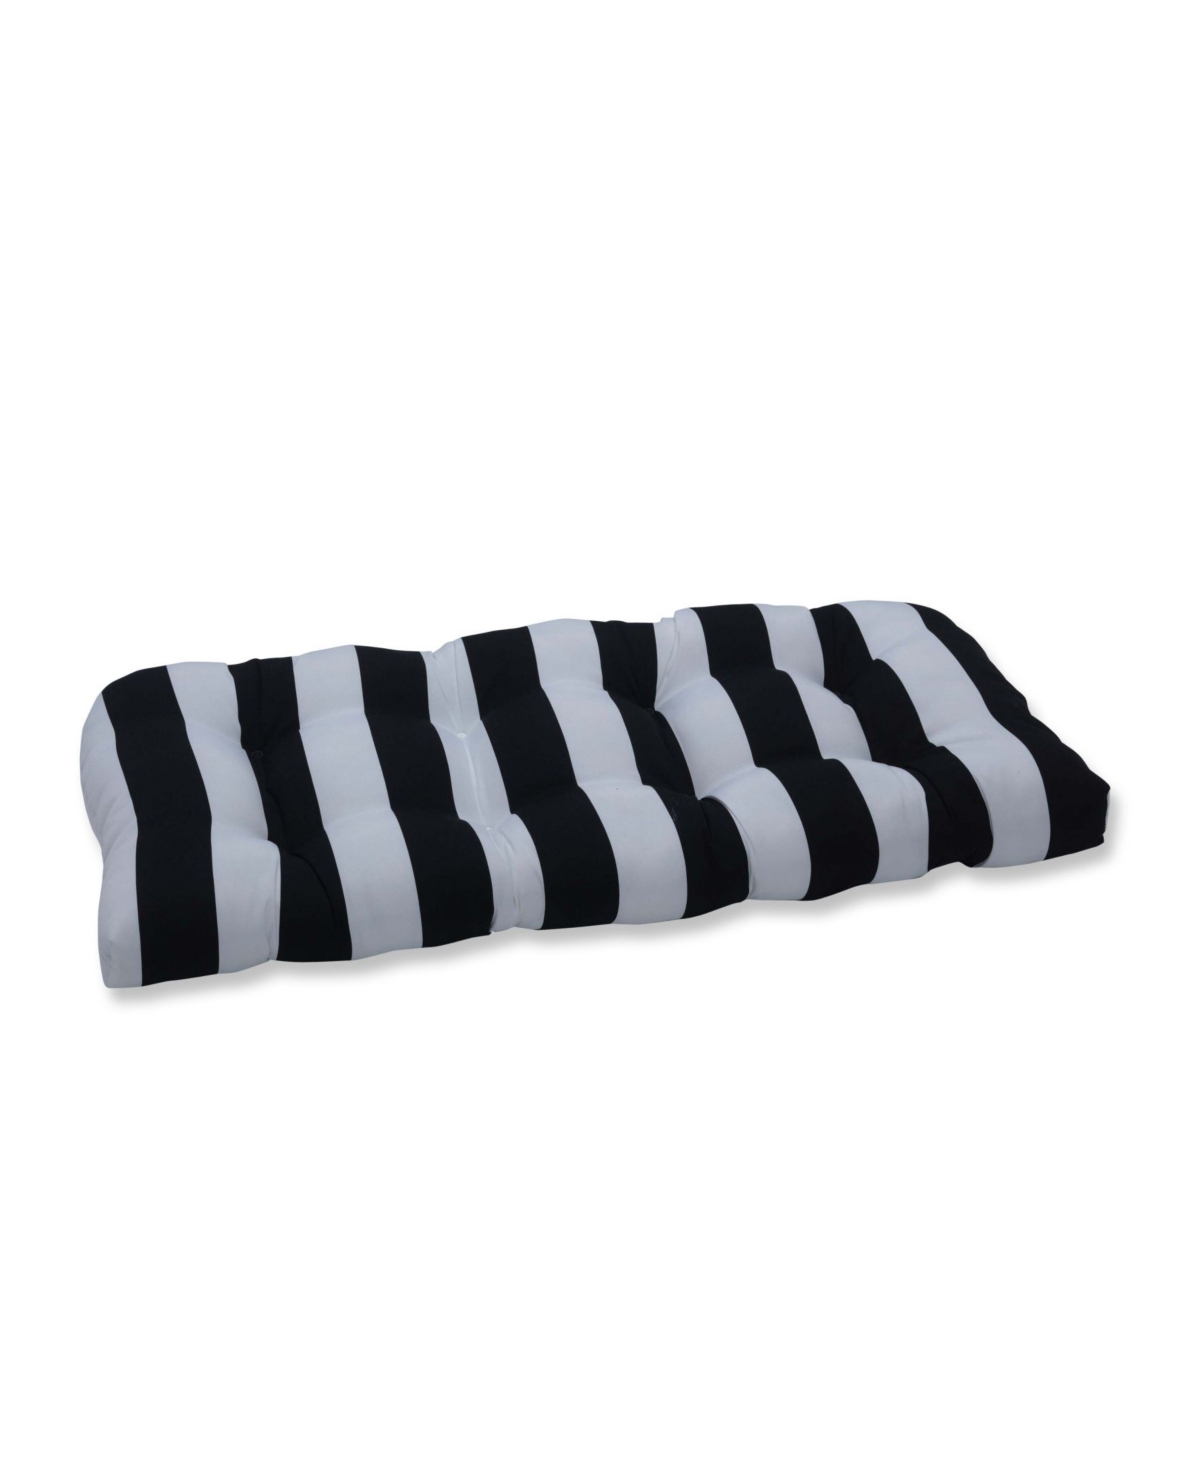 Cabana Stripe Wicker Loveseat Cushion - Black